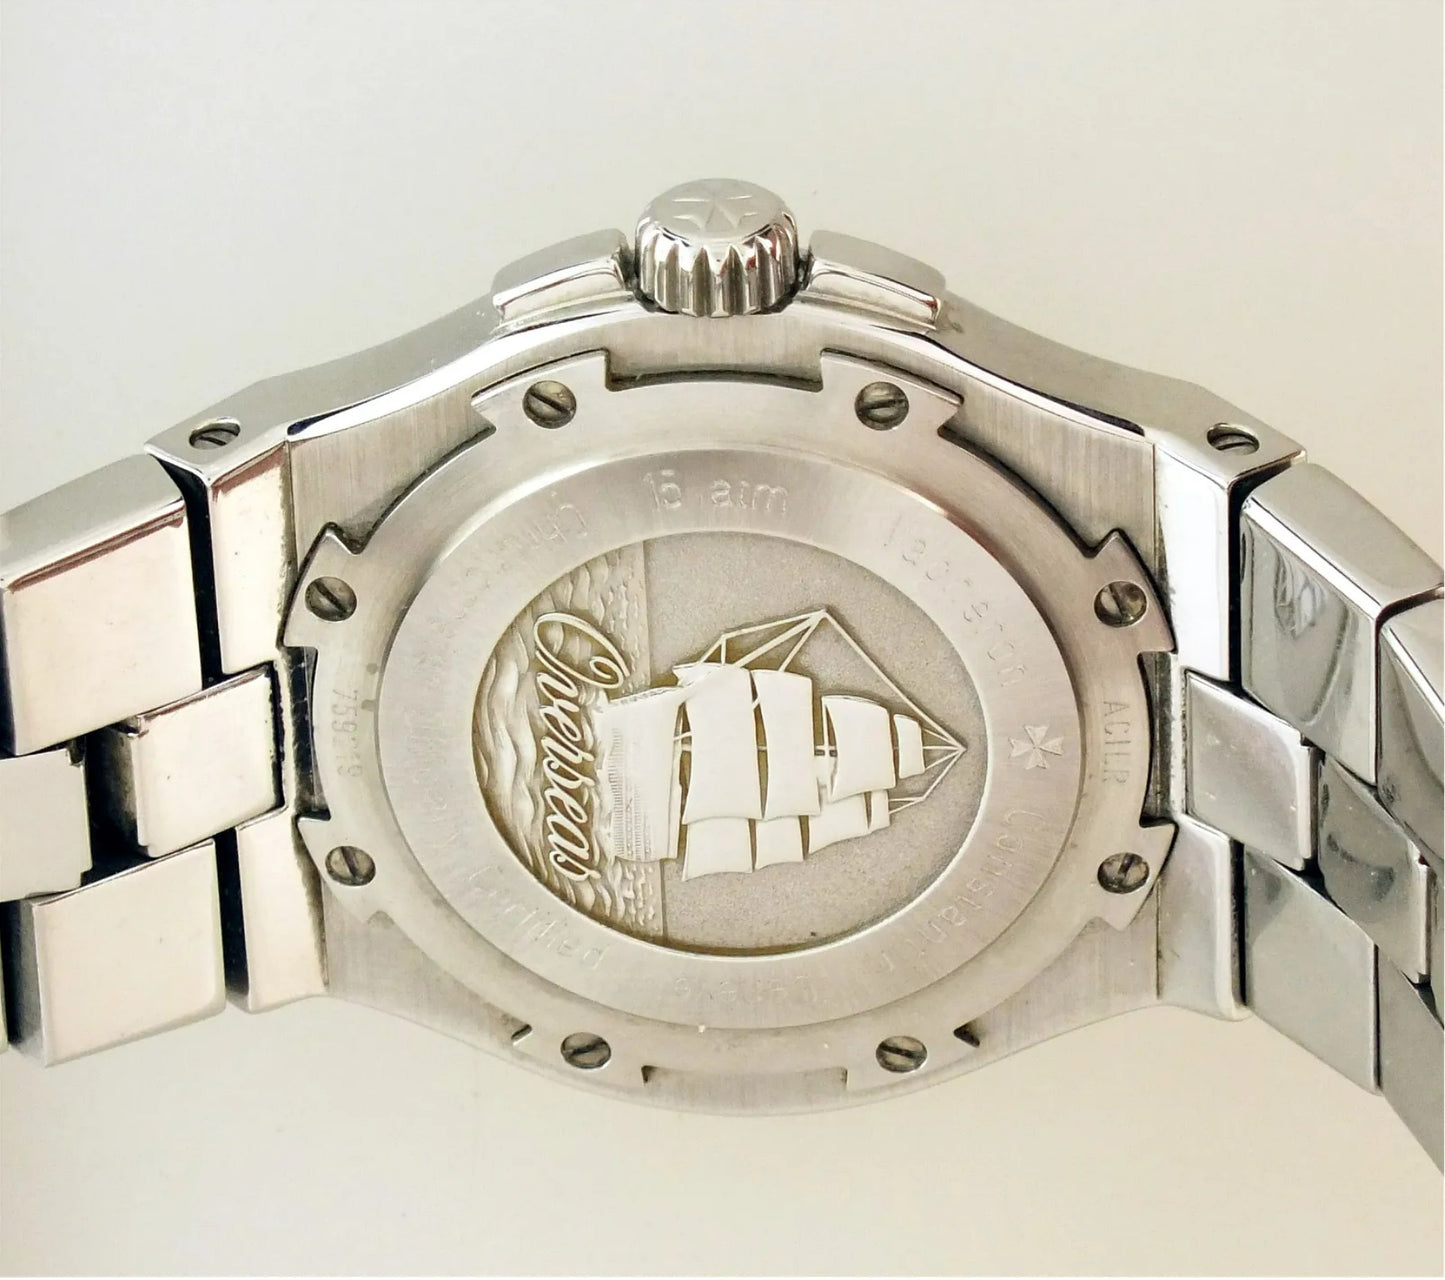 Vacheron & Constantin "Overseas" Stainless Steel Wristwatch